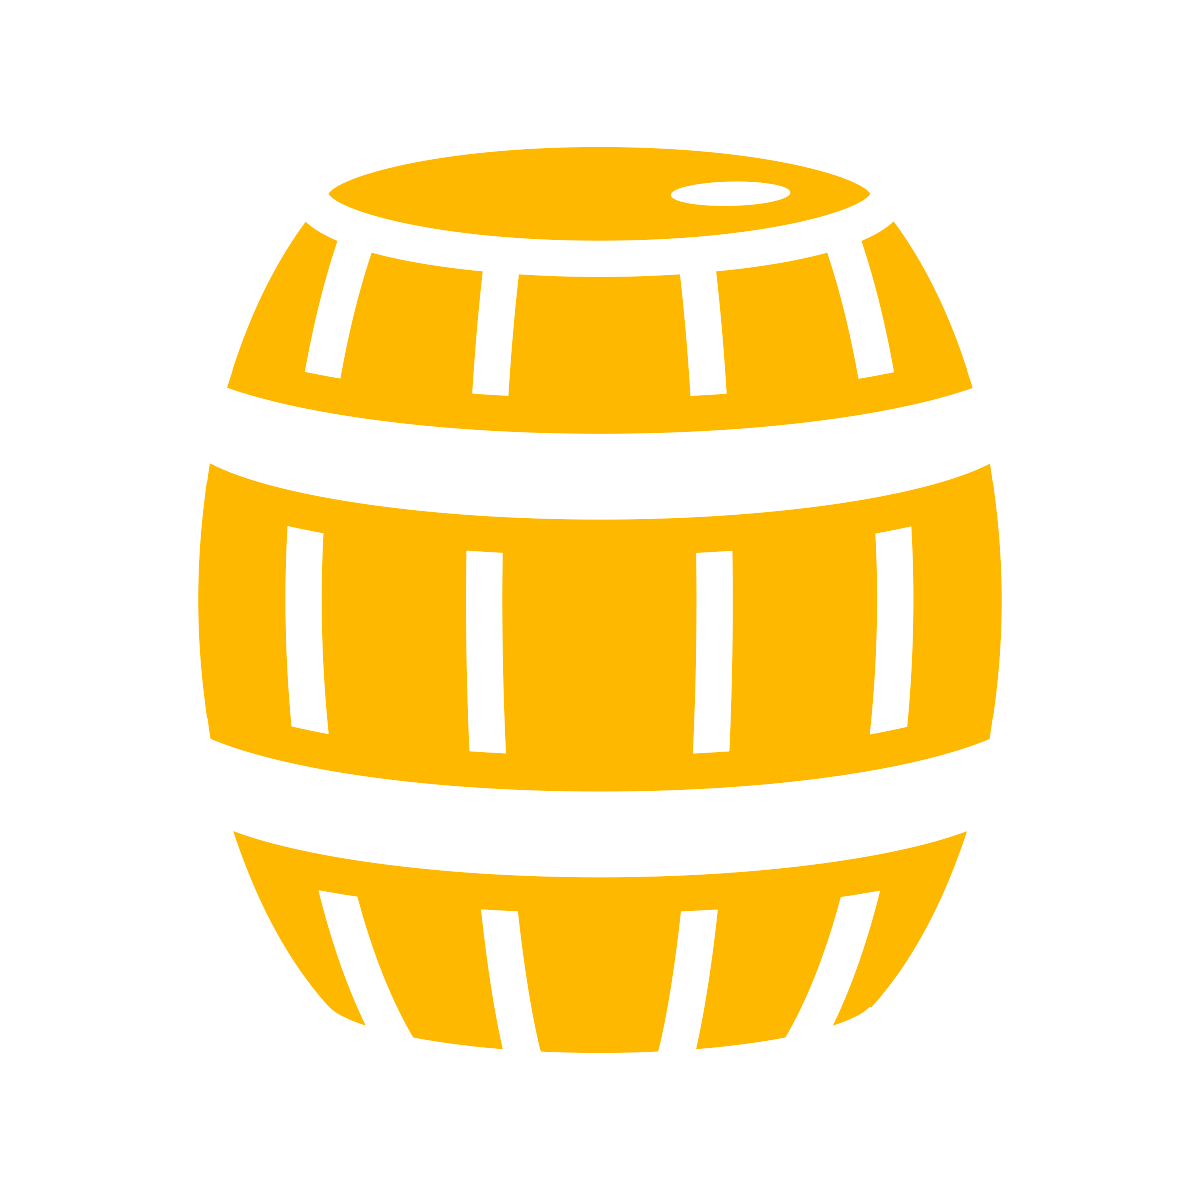 stylized beer barrel